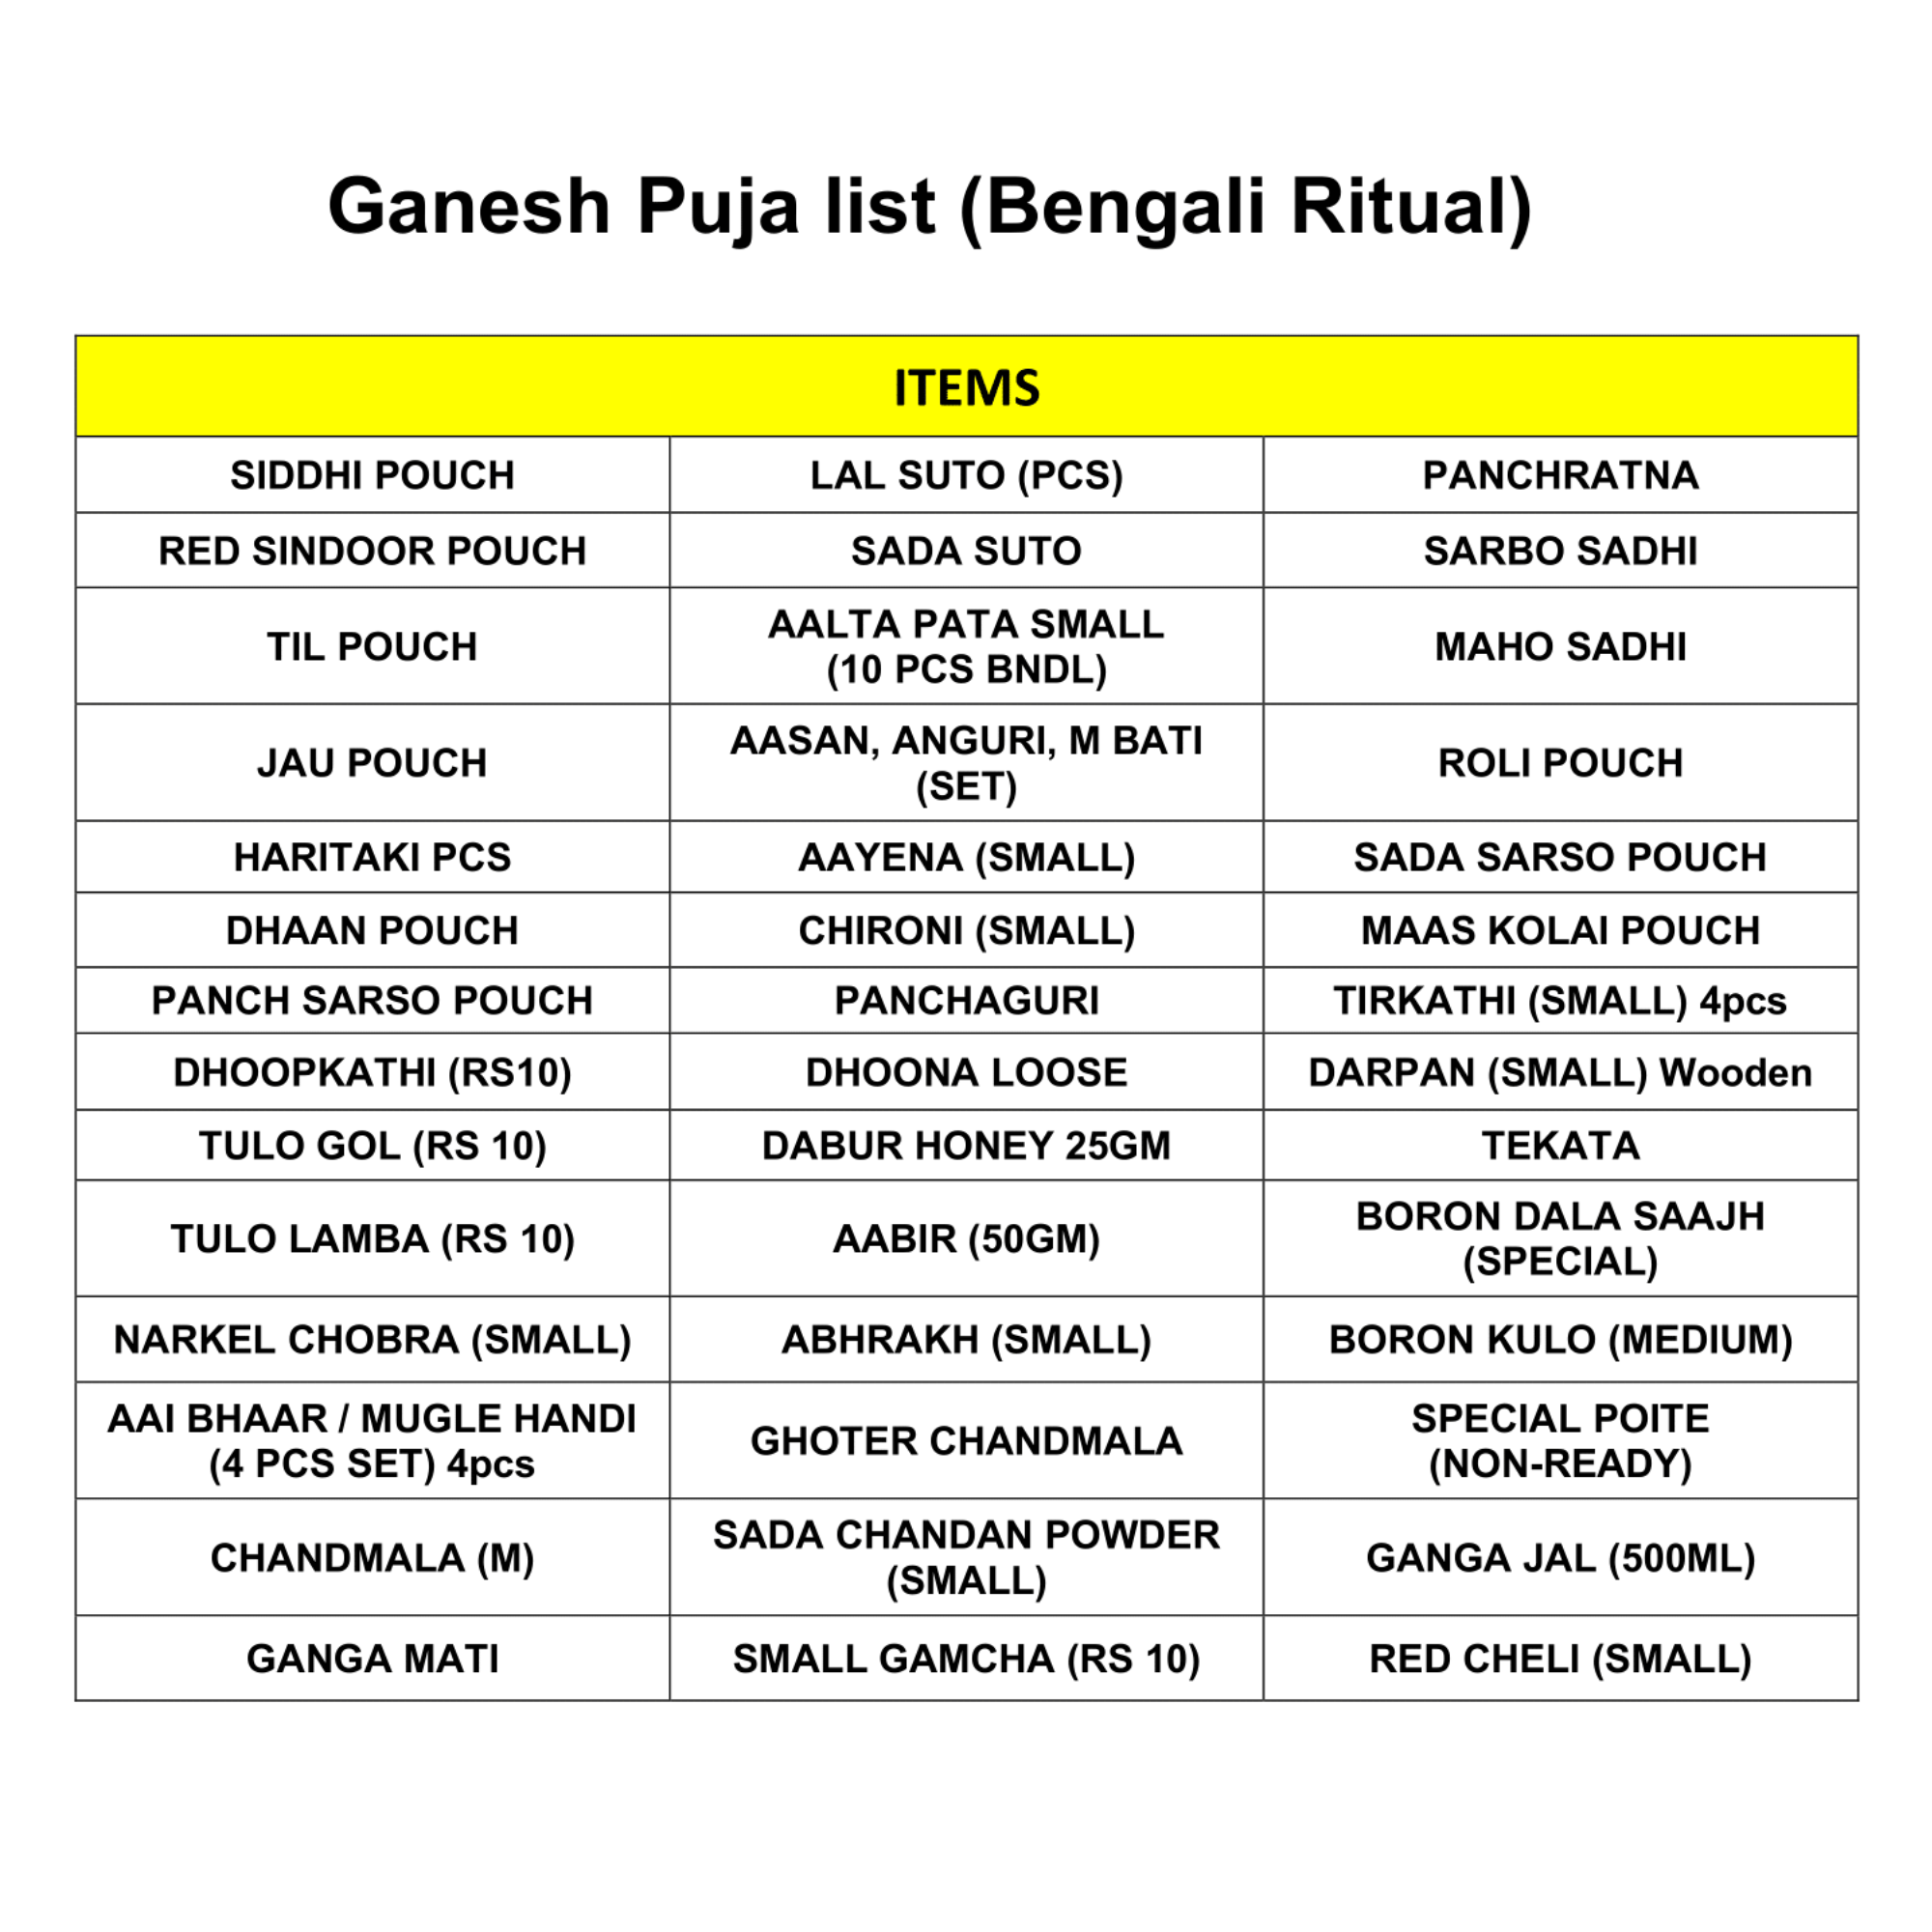 Ganesh Puja Kit (Bengali Rituals)